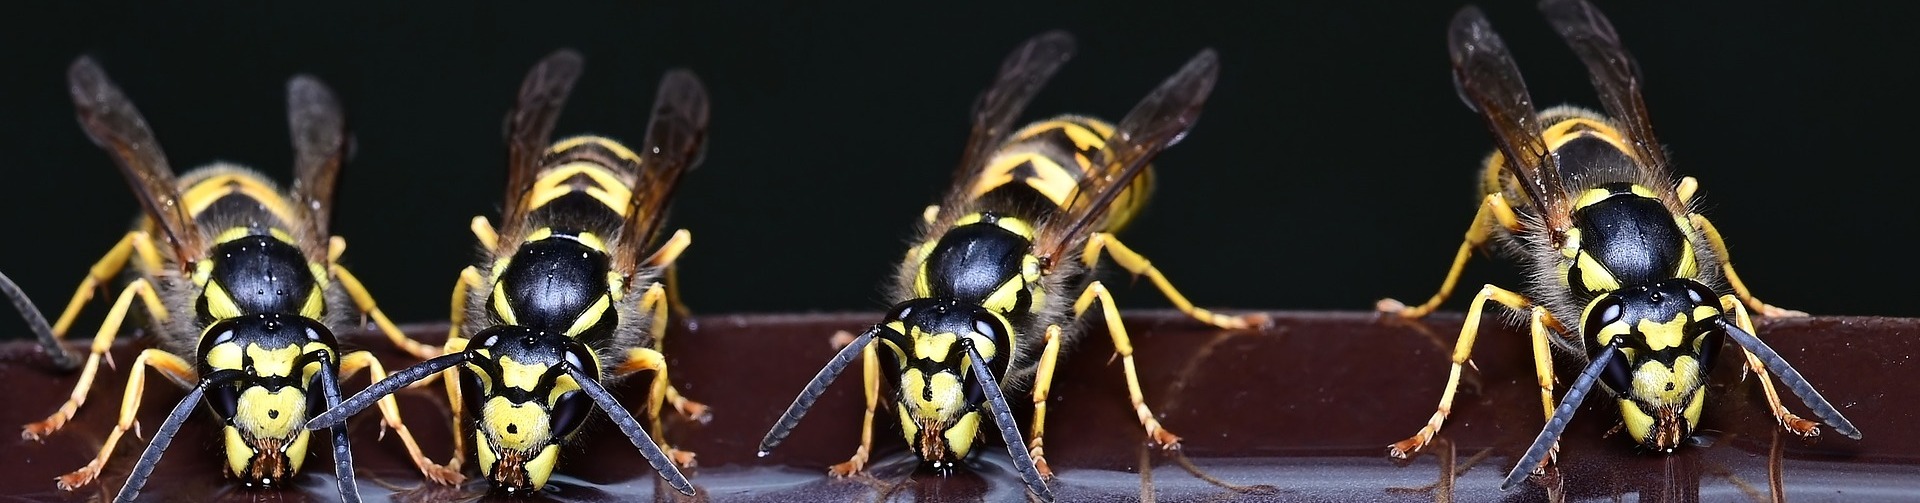 wasps drinking